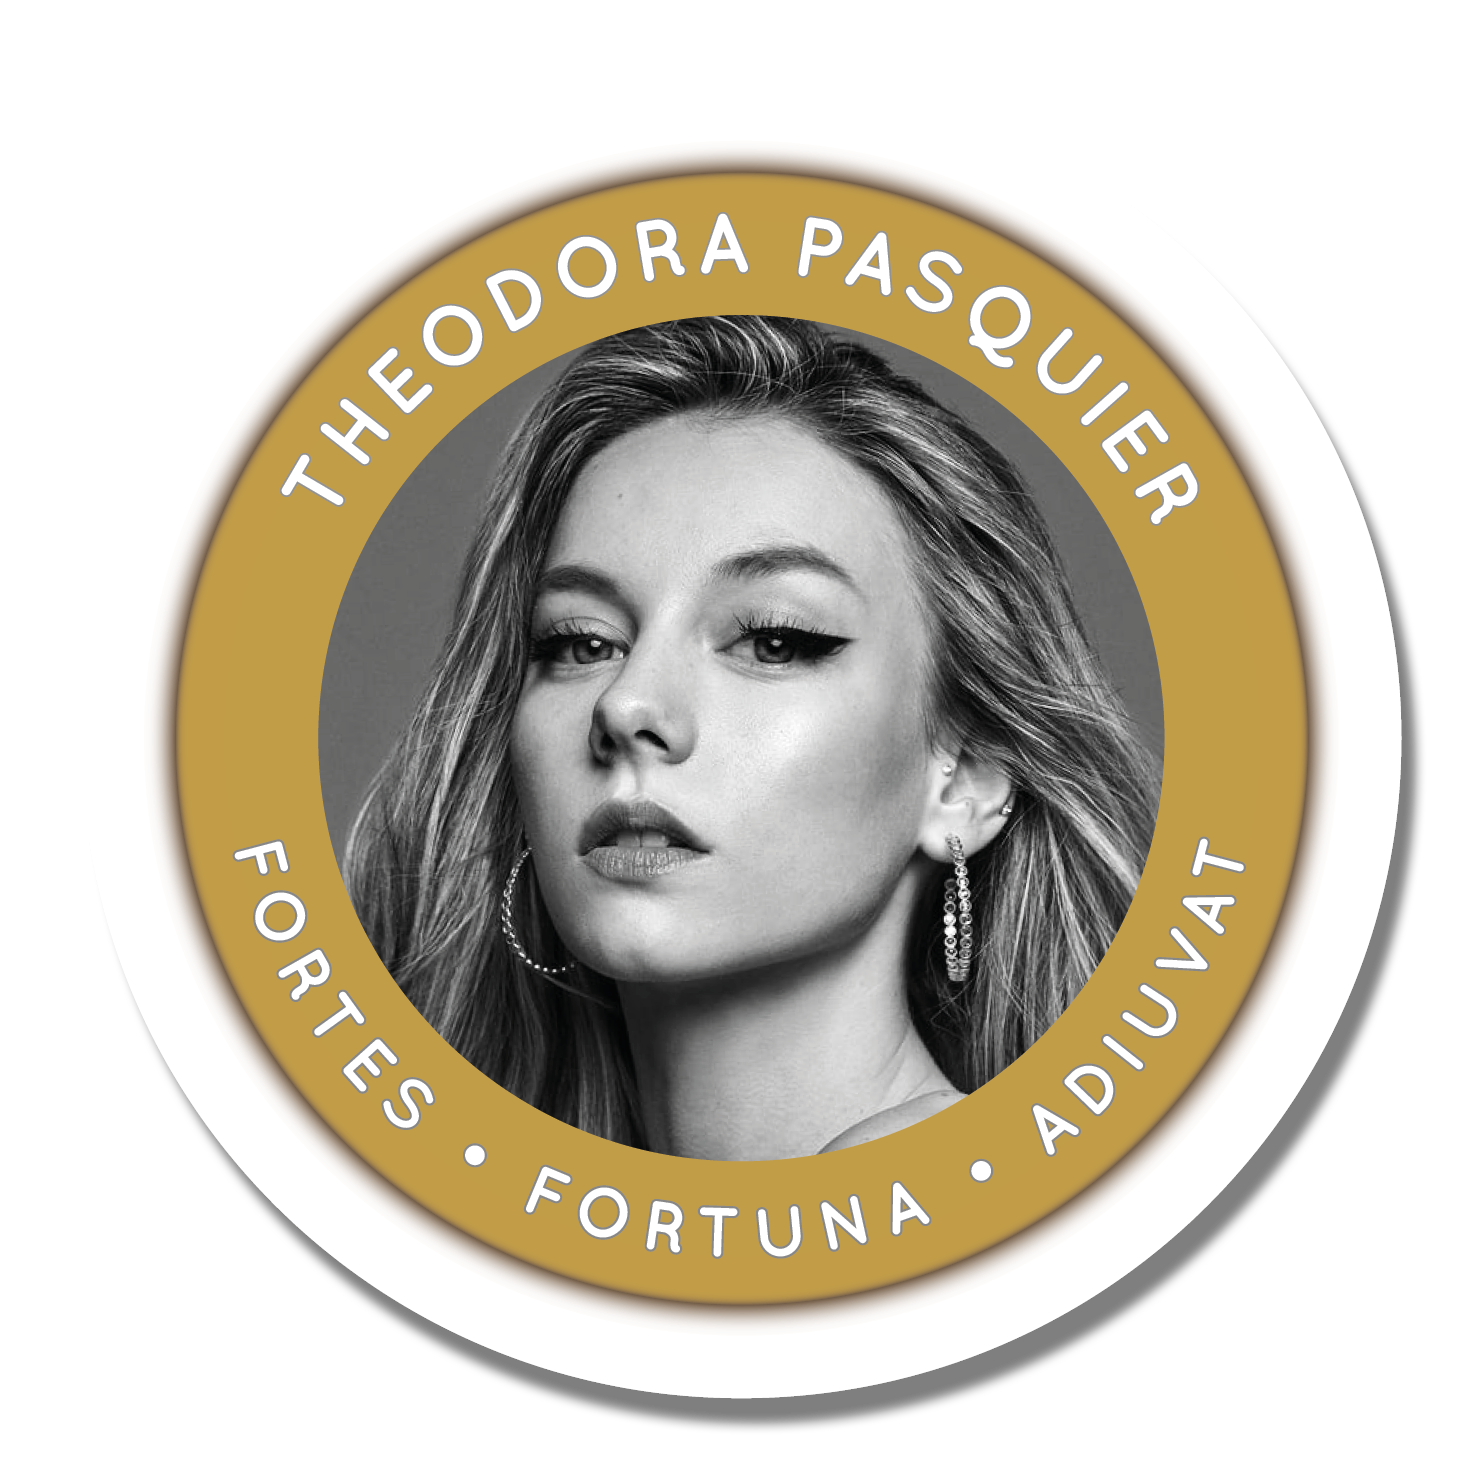 Voir un profil - Theodora Pasquier Mba7